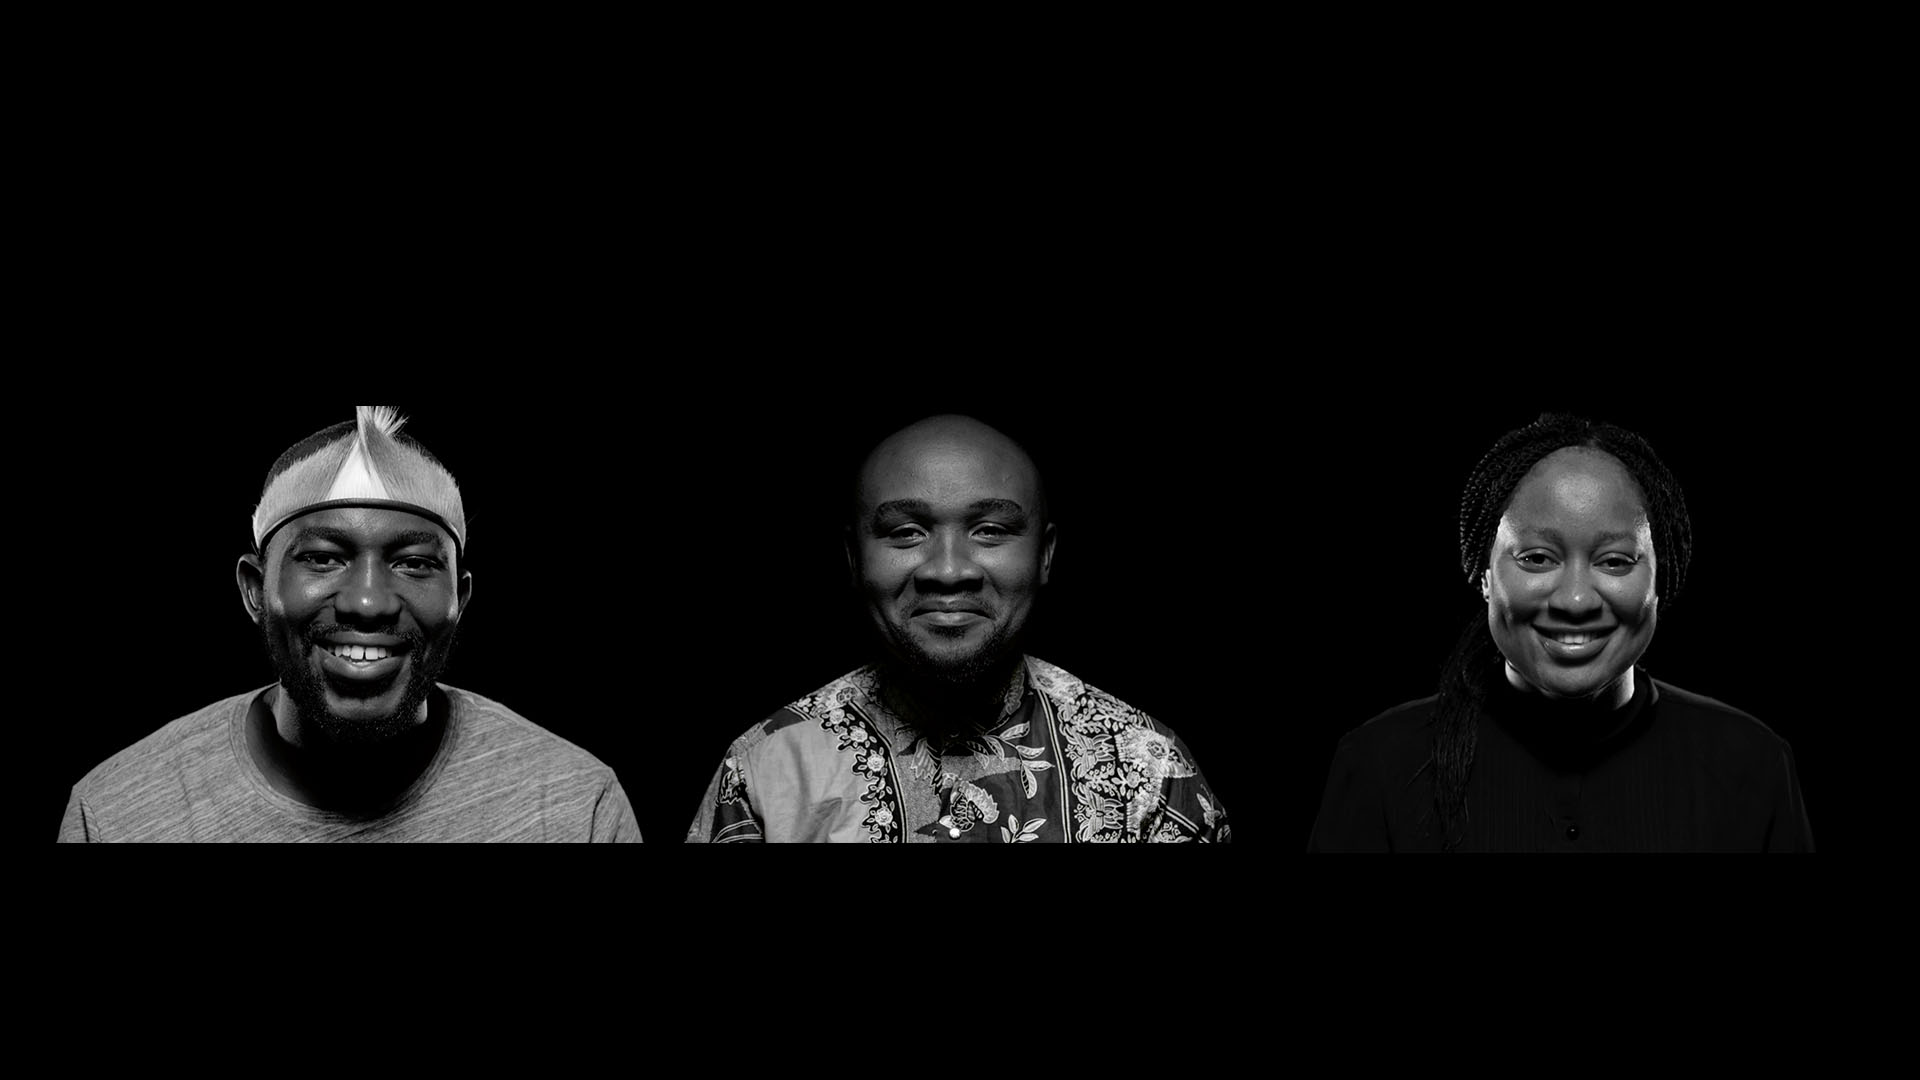 Three Mandela Washington Fellows, participants in the #ShareTheLight Film at the Presidential Precinct